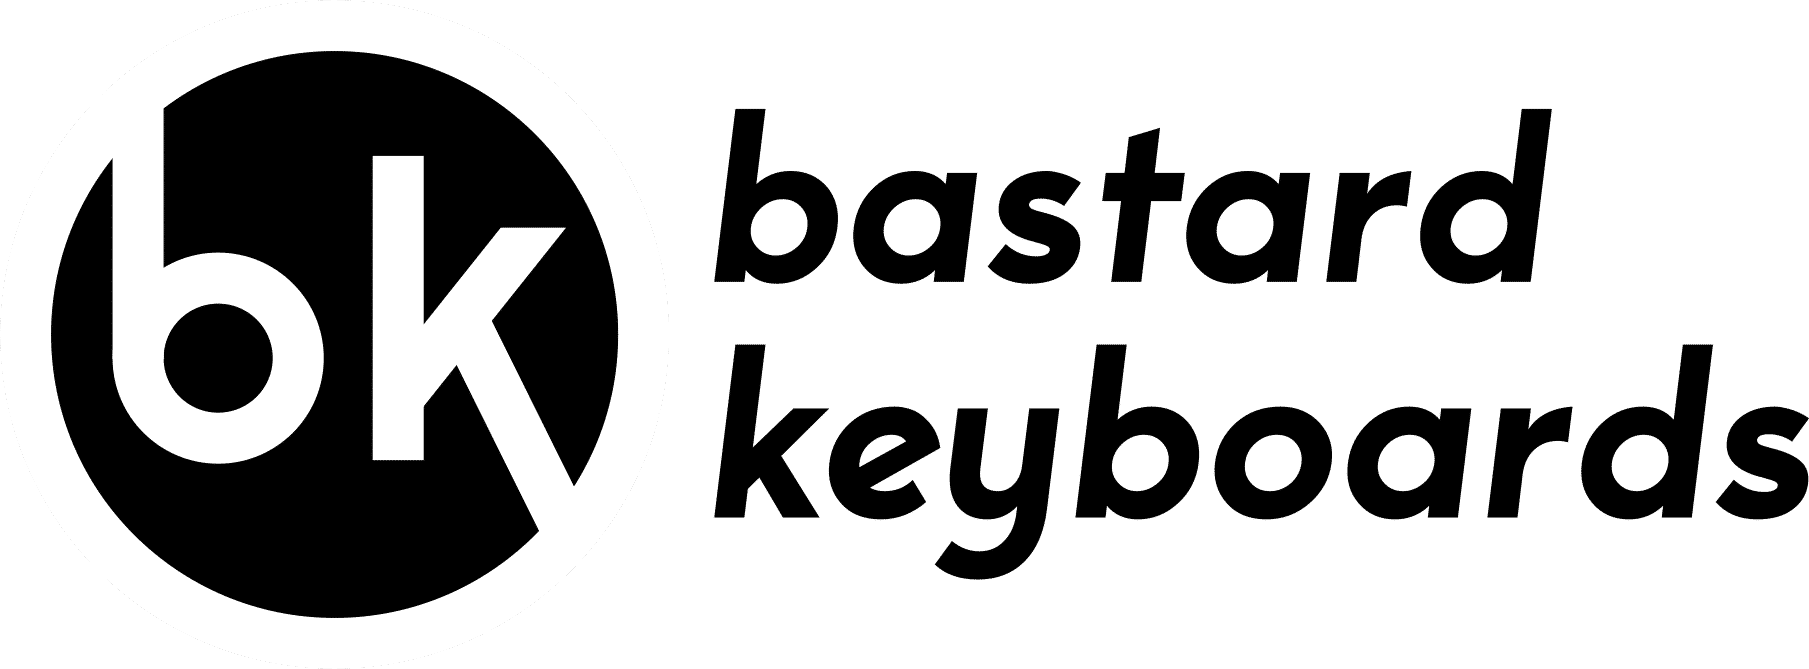 Bastard Keyboards – Split ergonomic keyboards